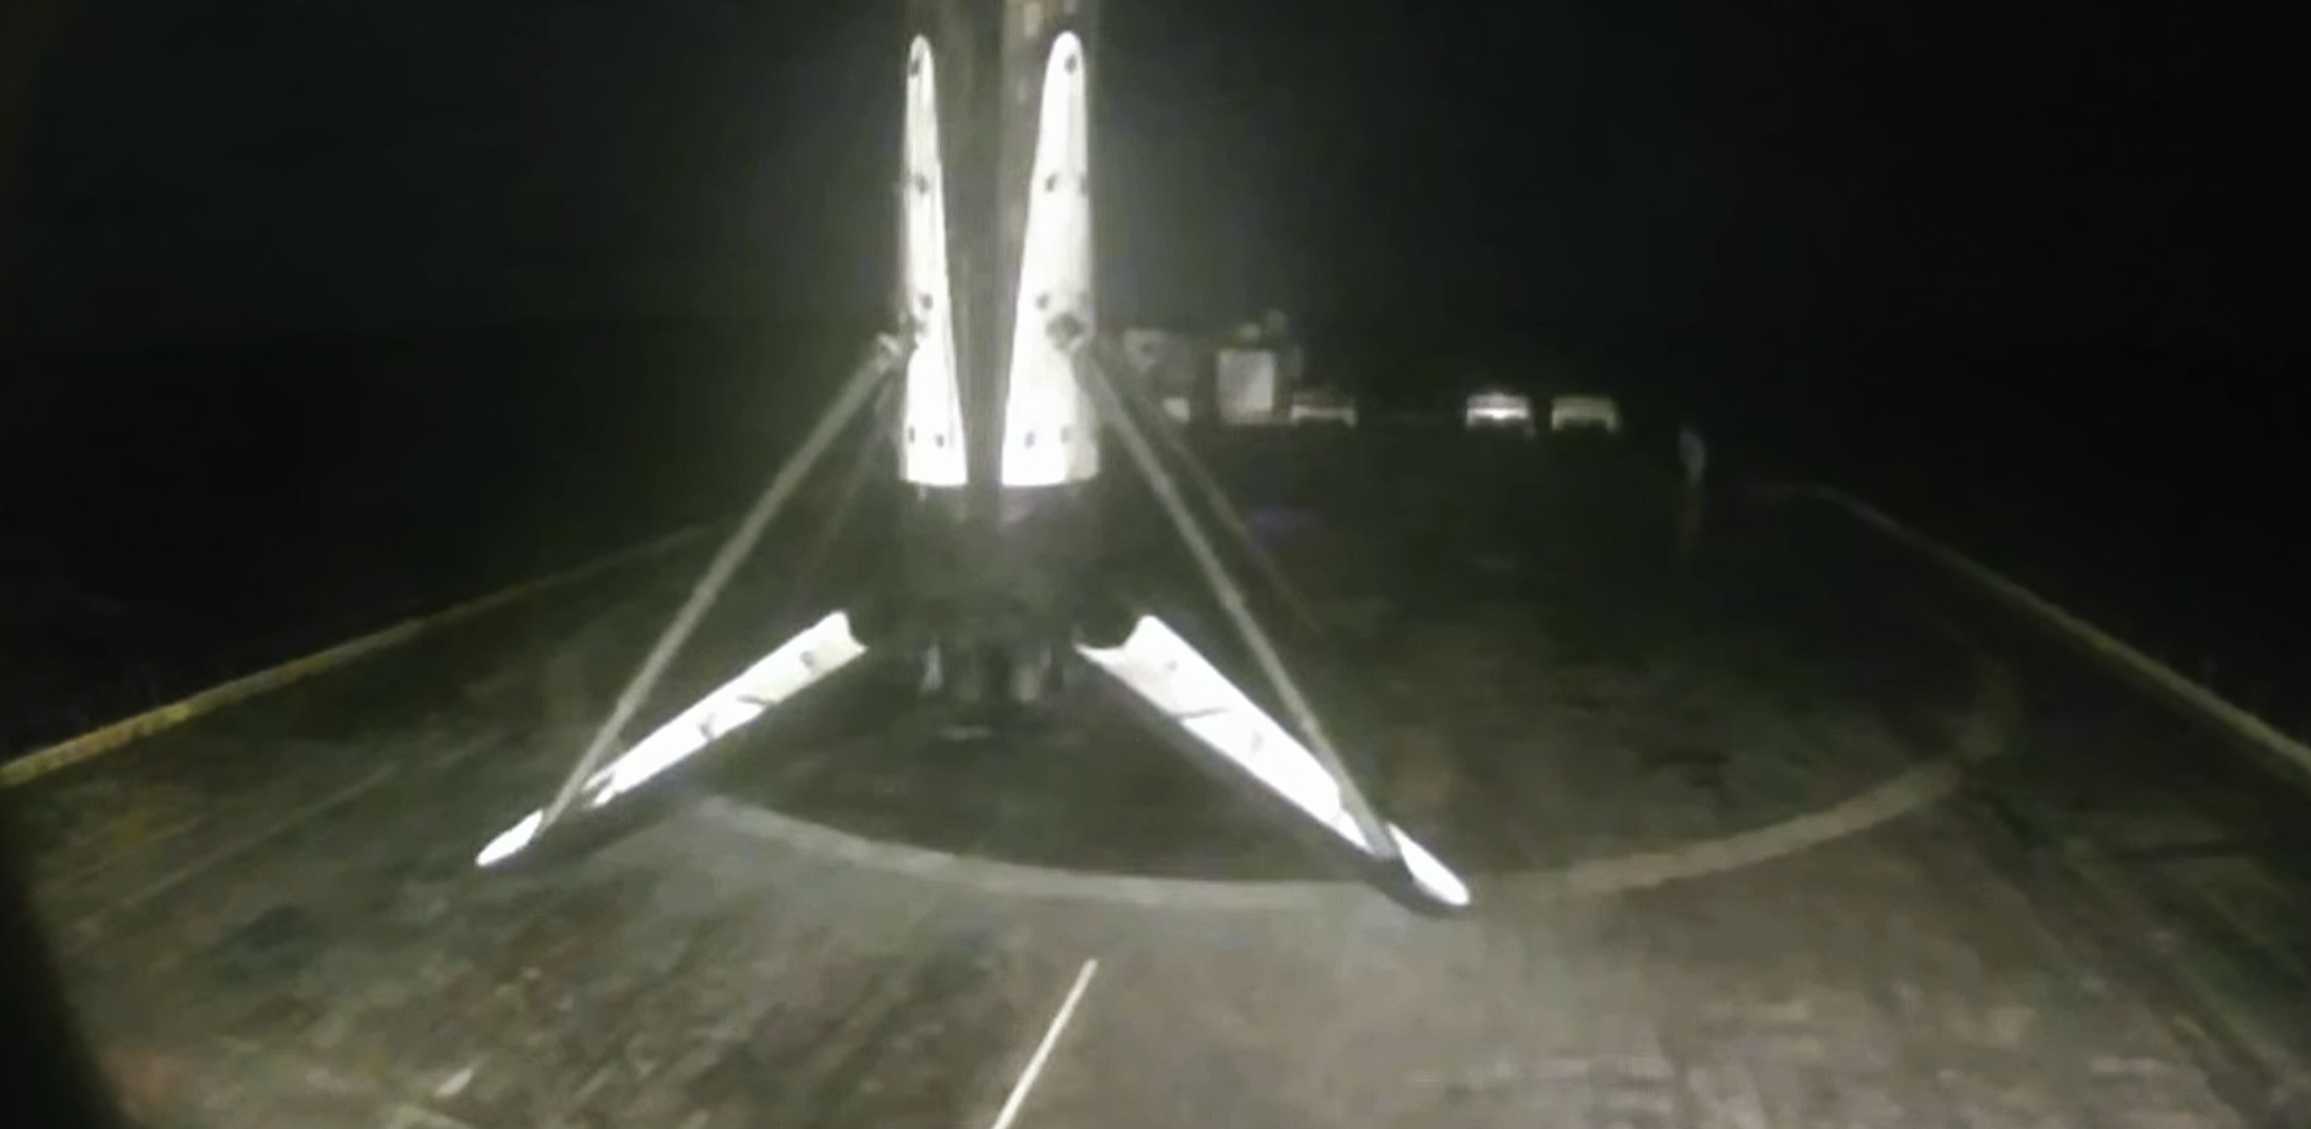 Starlink-8 Falcon 9 B1049 LC-40 060320 webcast (SpaceX) JRTI landing 4 crop (c)